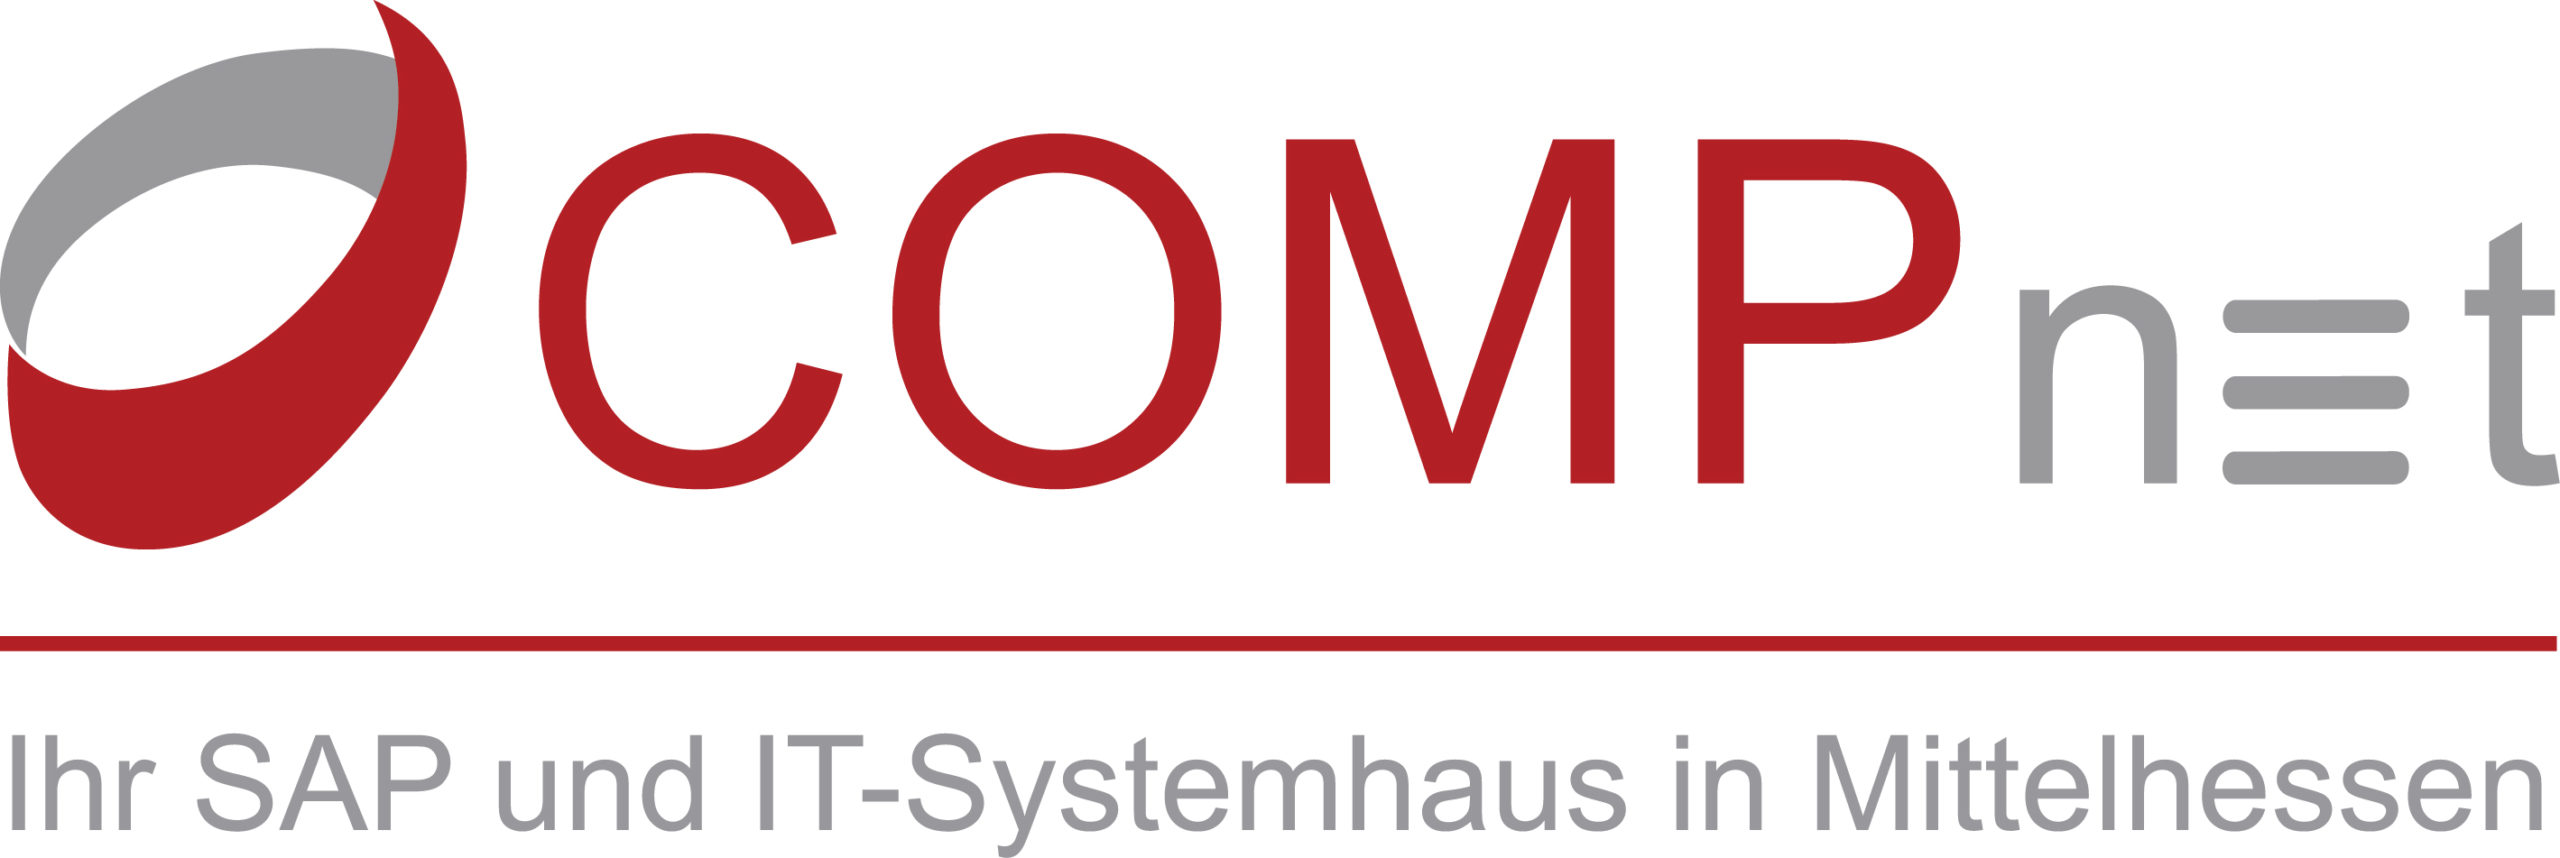 COMP.net GmbH Tagline